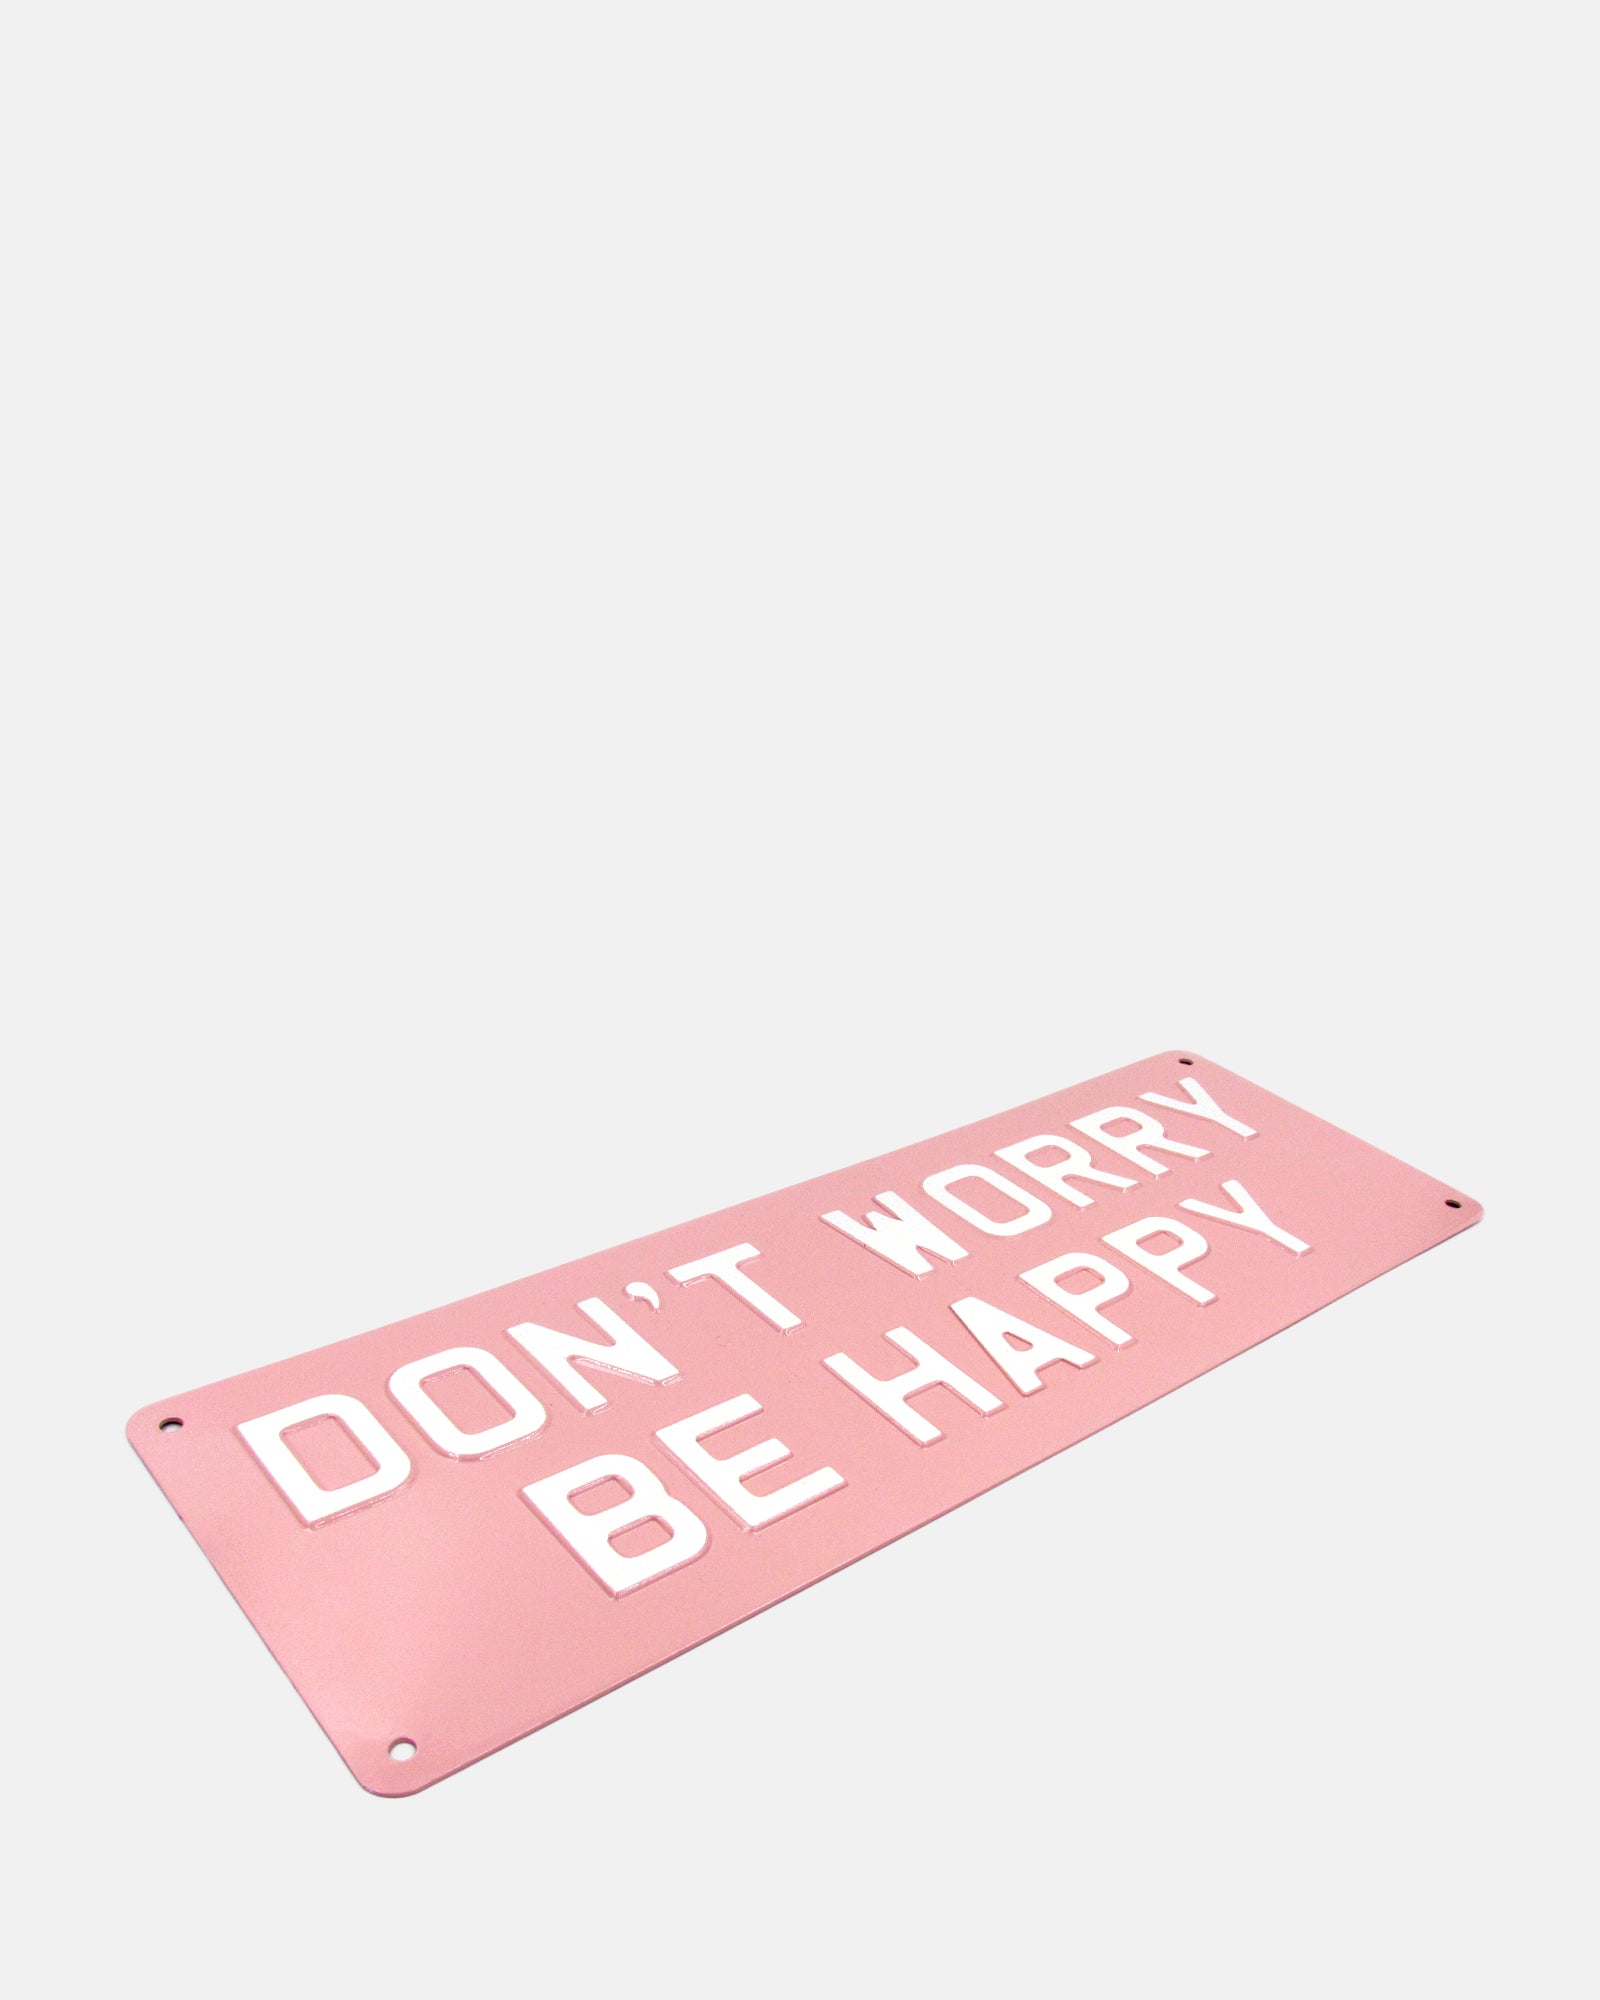 Don't Worry Be Happy Enamel Sign - Pink - BRIT LOCKER